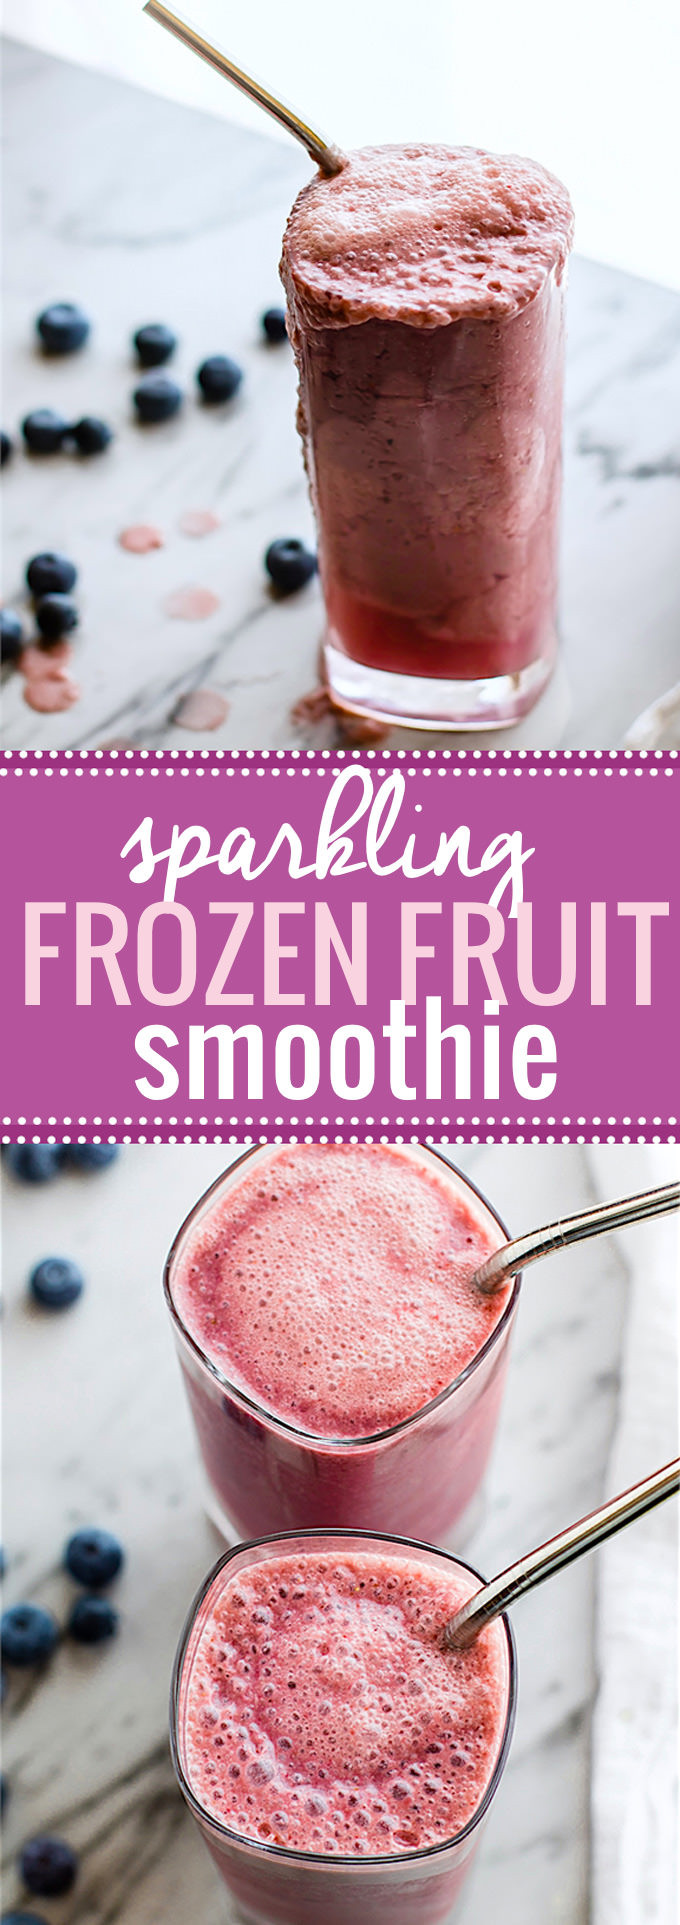 Freezing Fruit For Smoothies
 5 ingre nt Sparkling Frozen Fruit Smoothie